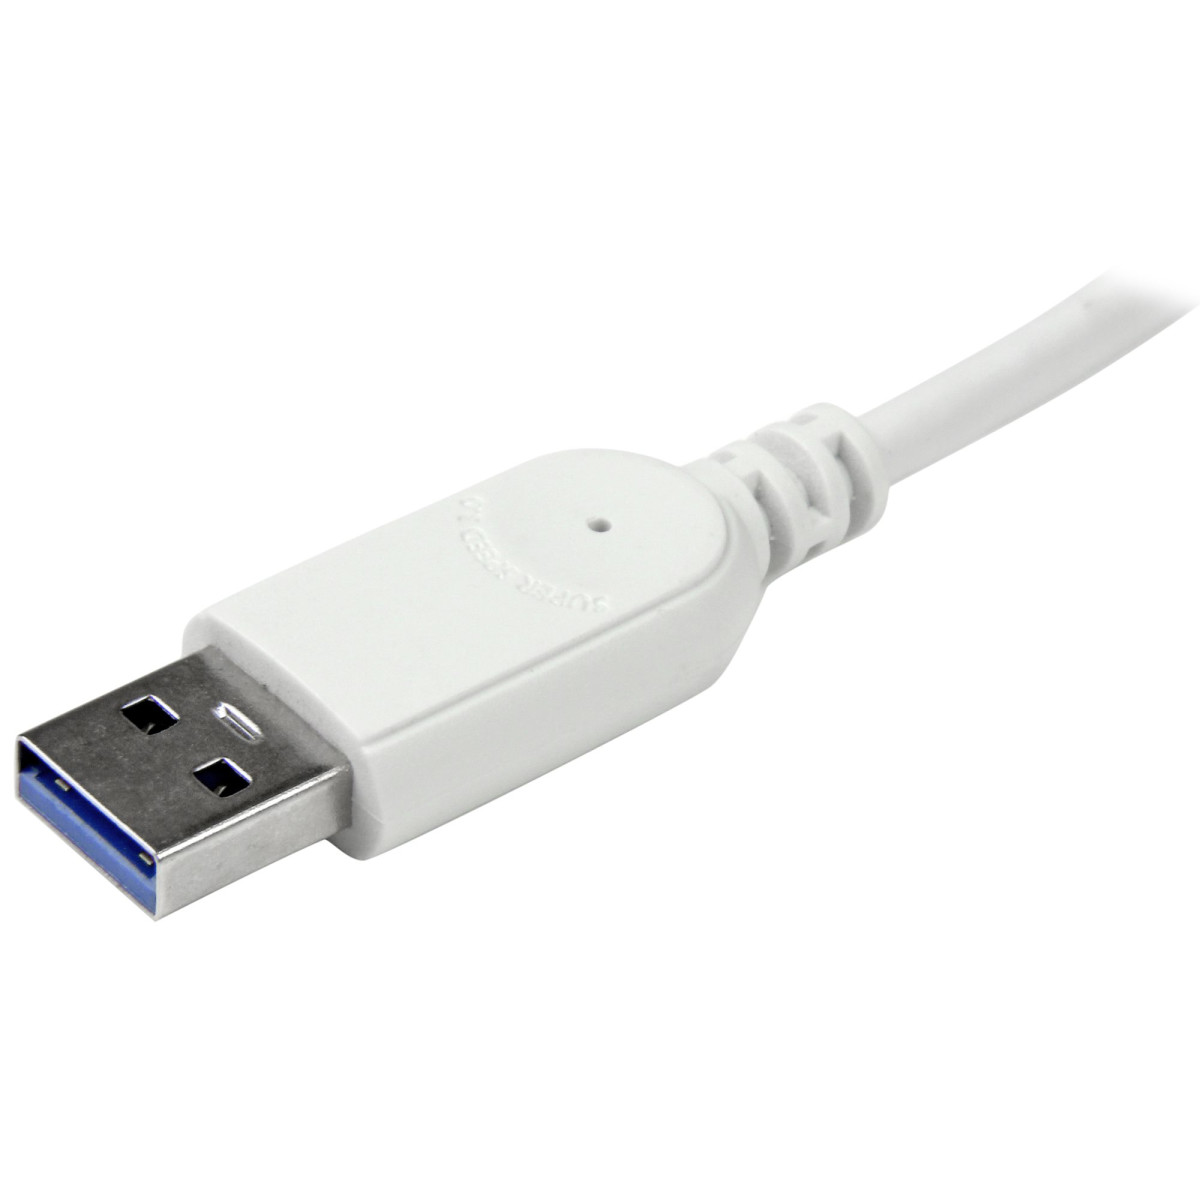 4Pt Portable USB 3.0 Hub w/Builtin Cable